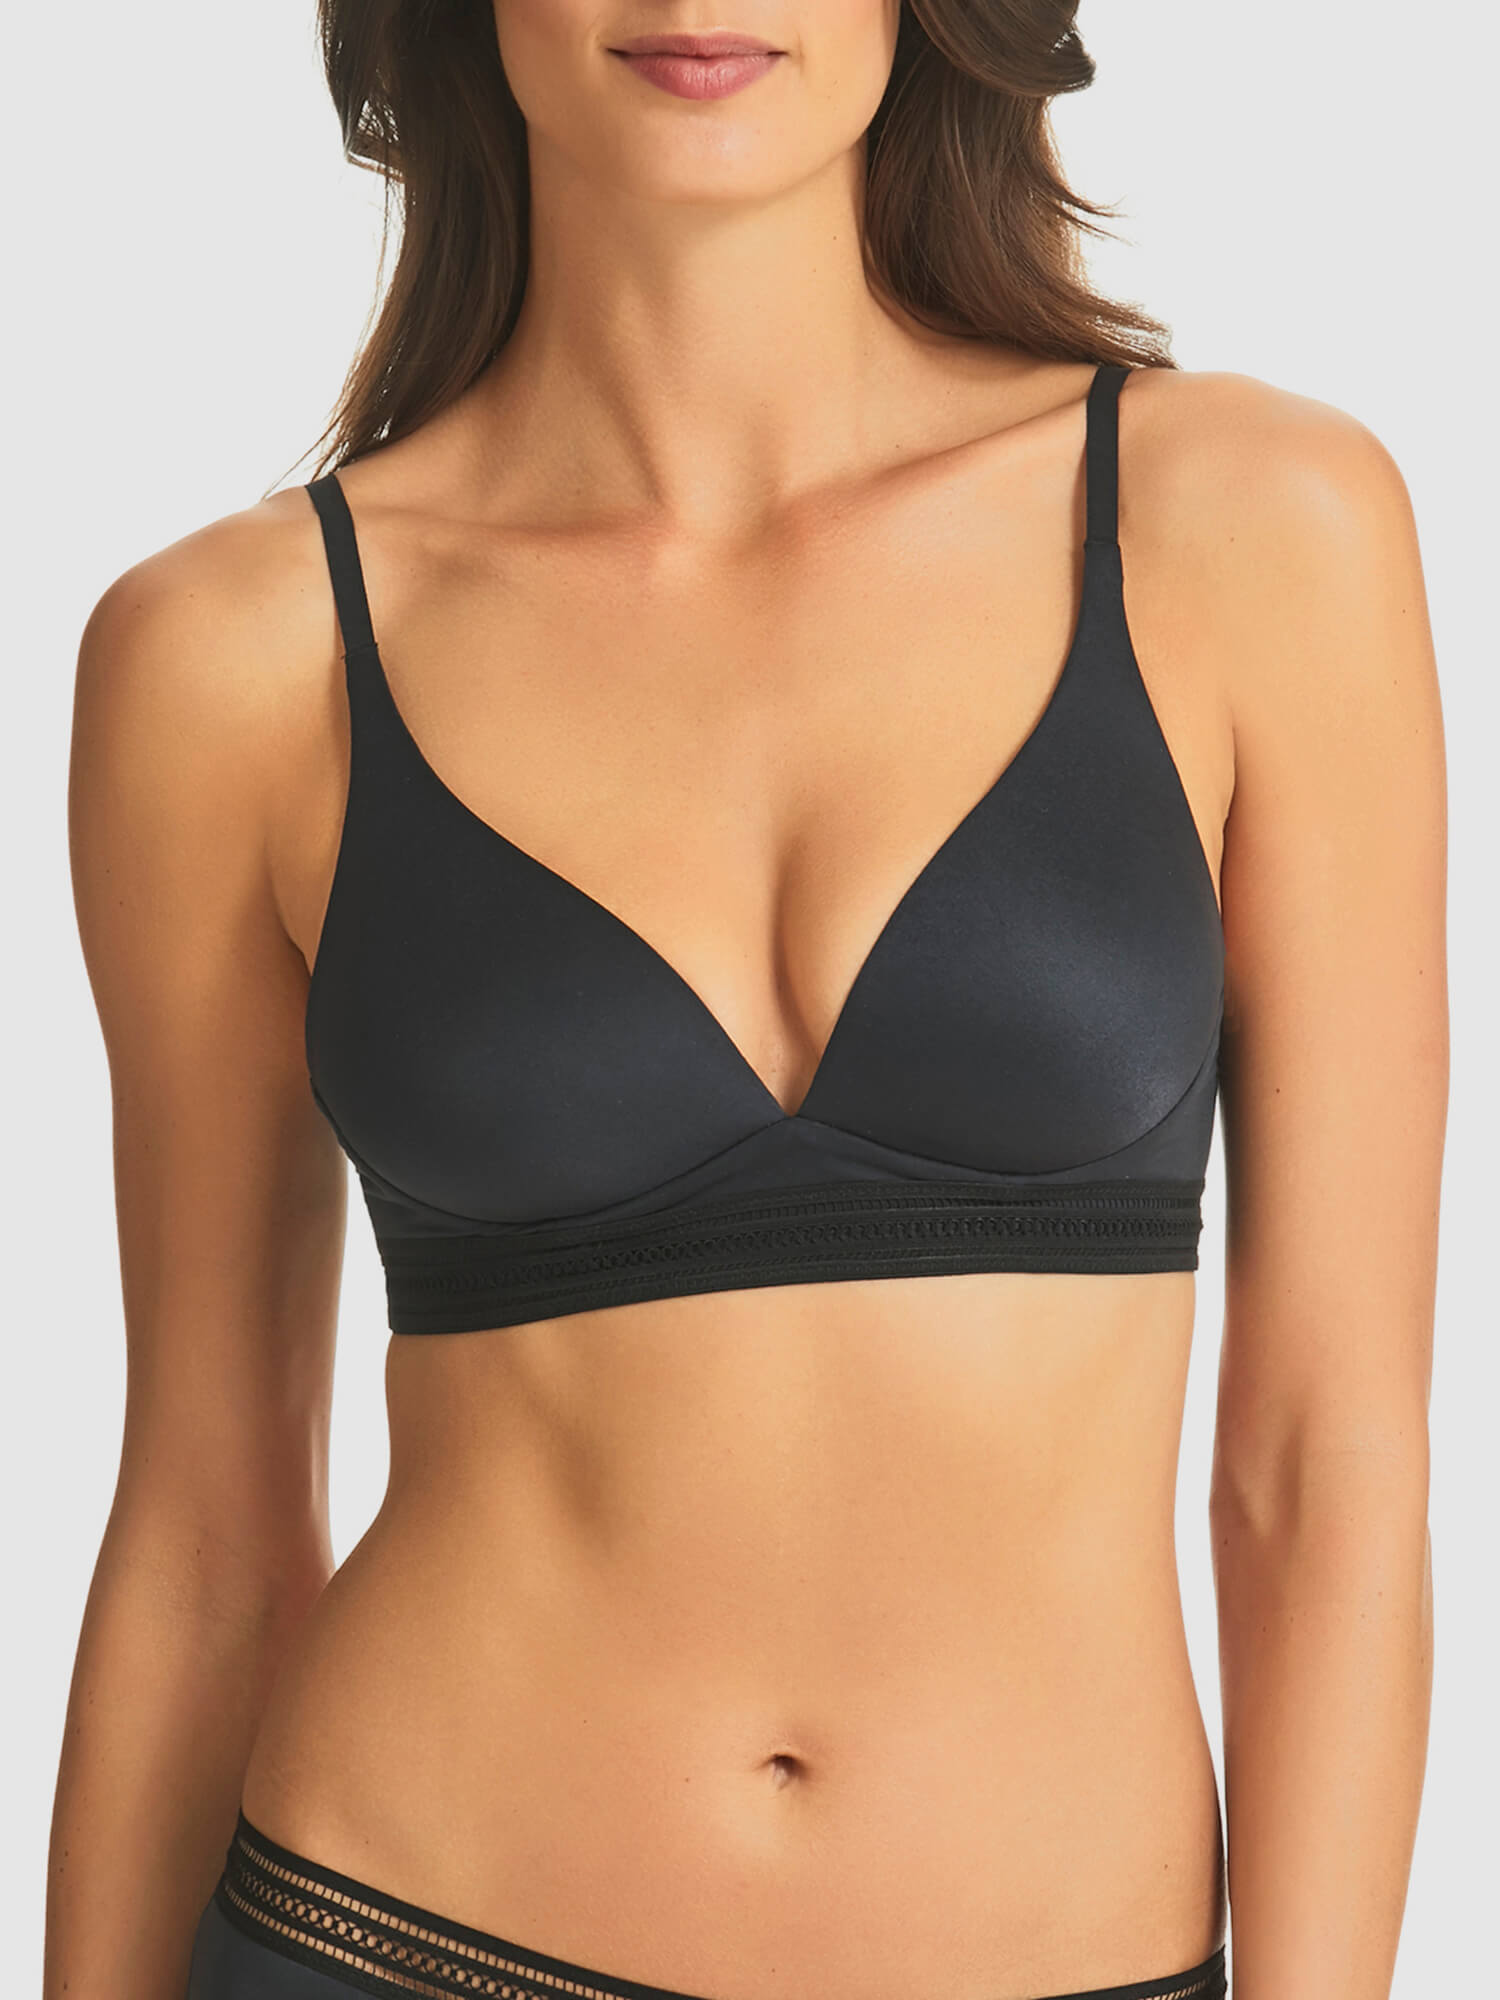 lmao #Rotfl #According to the #bra #boob #size #chart my …